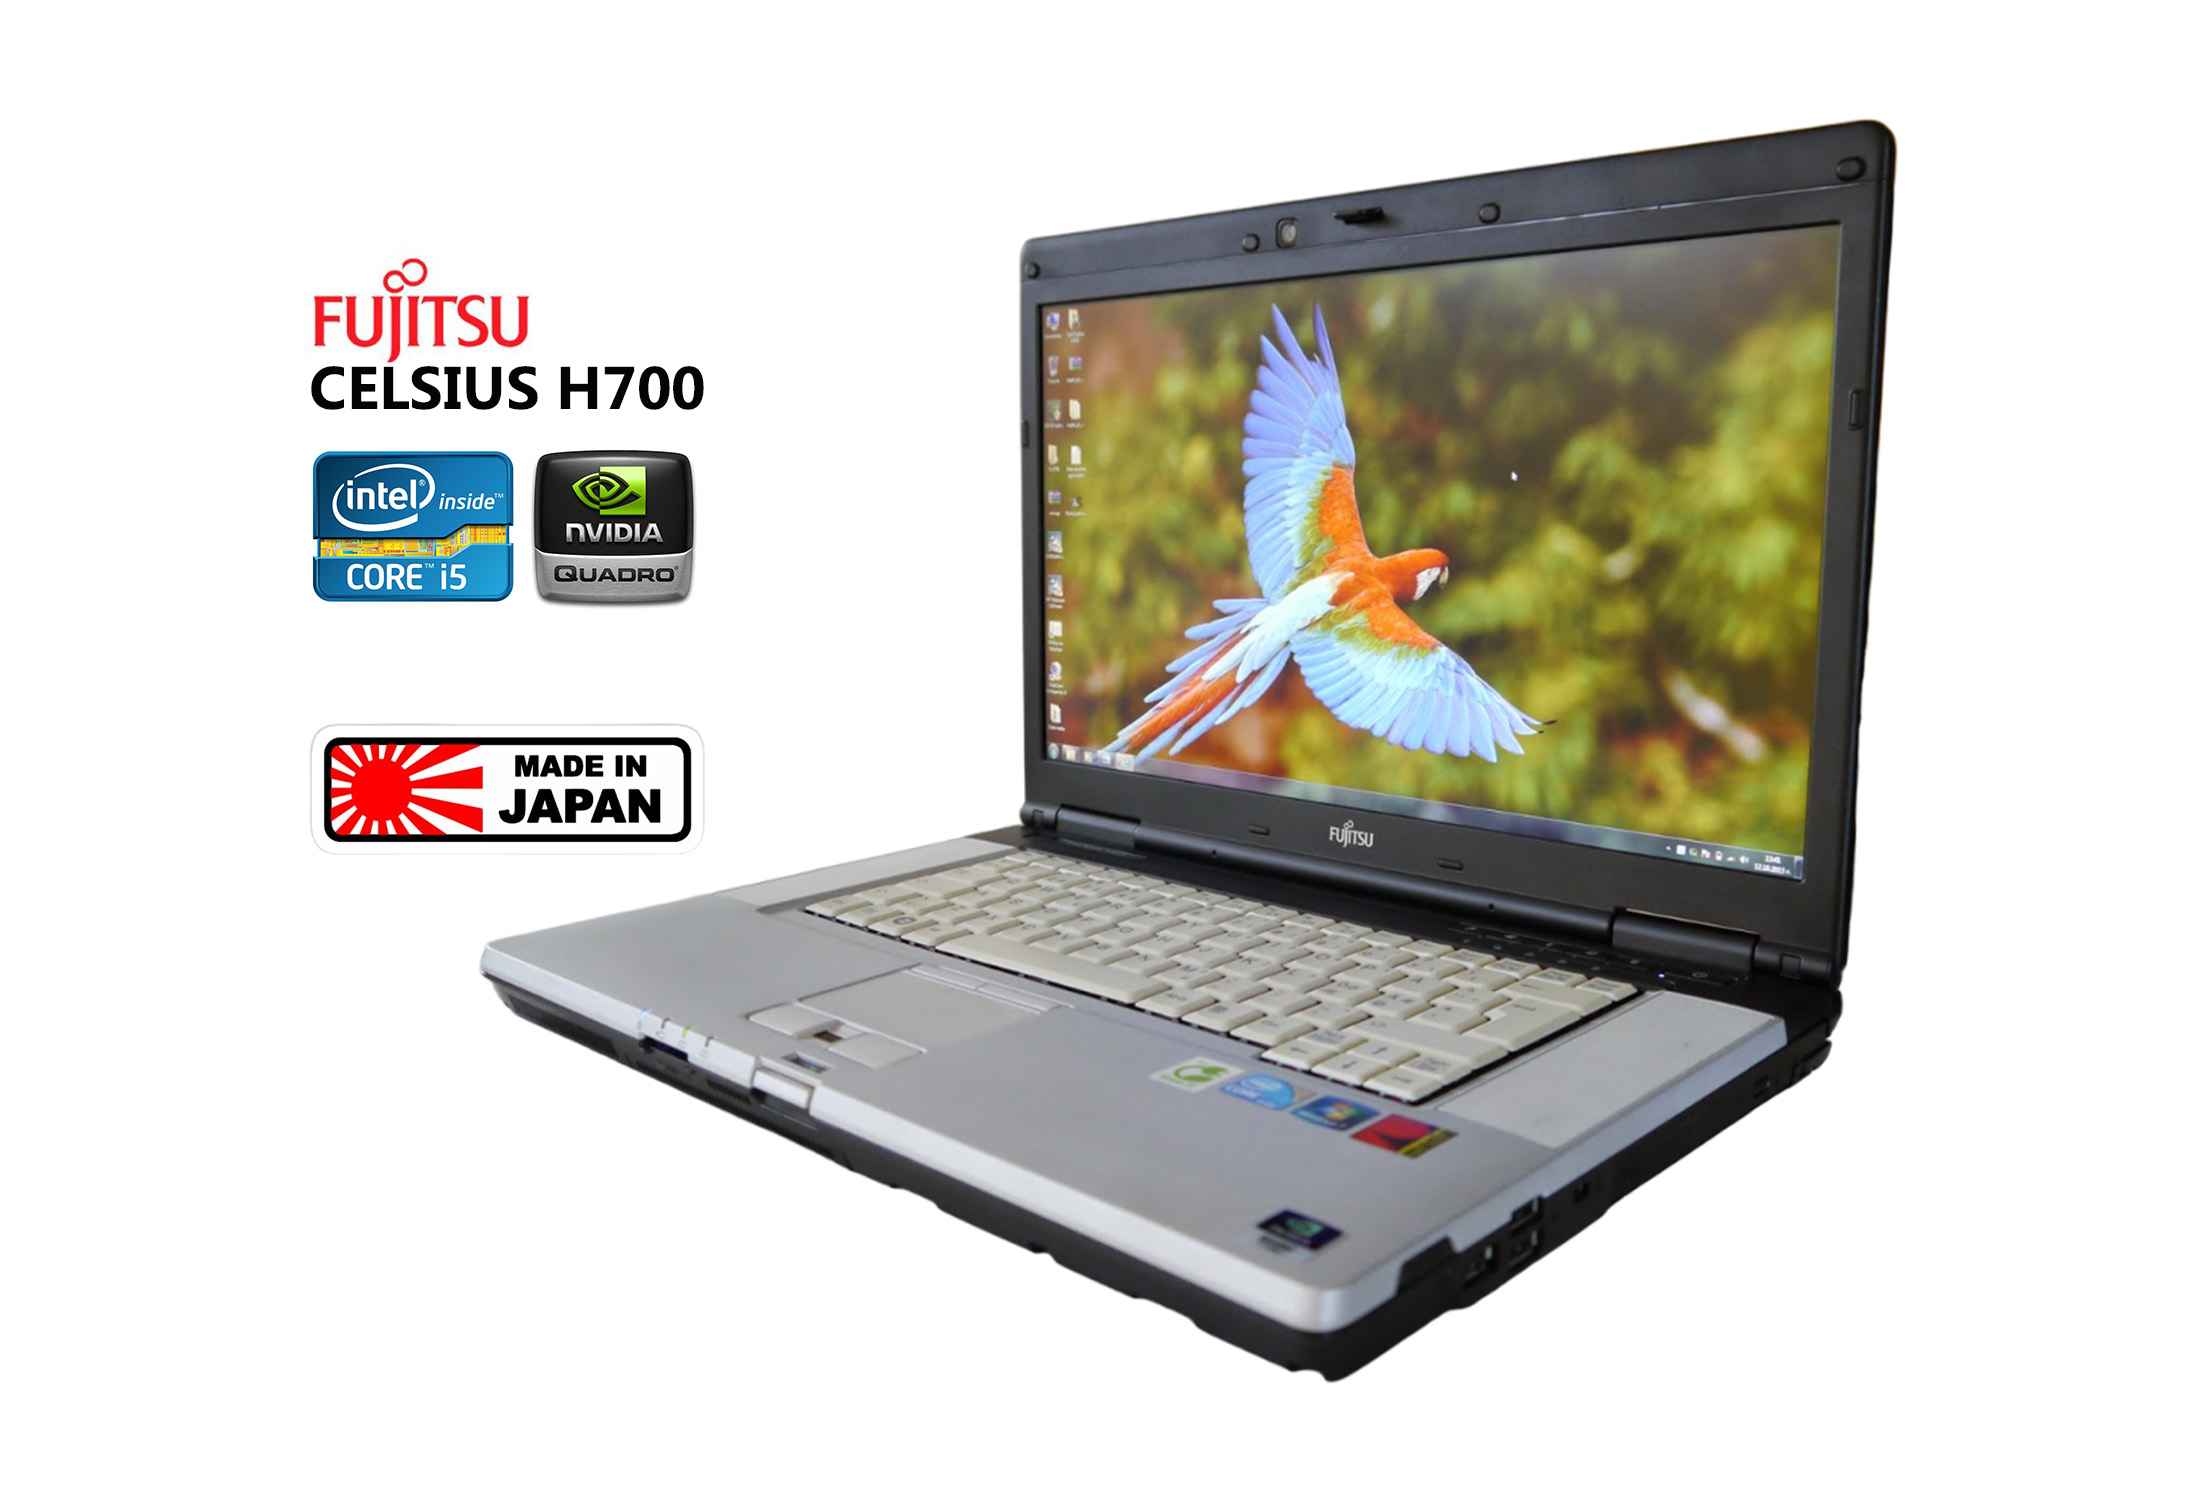 FUJITSU Celsius H700 i5-540M 6GB RAM  FHD Quadro FX880M Camera